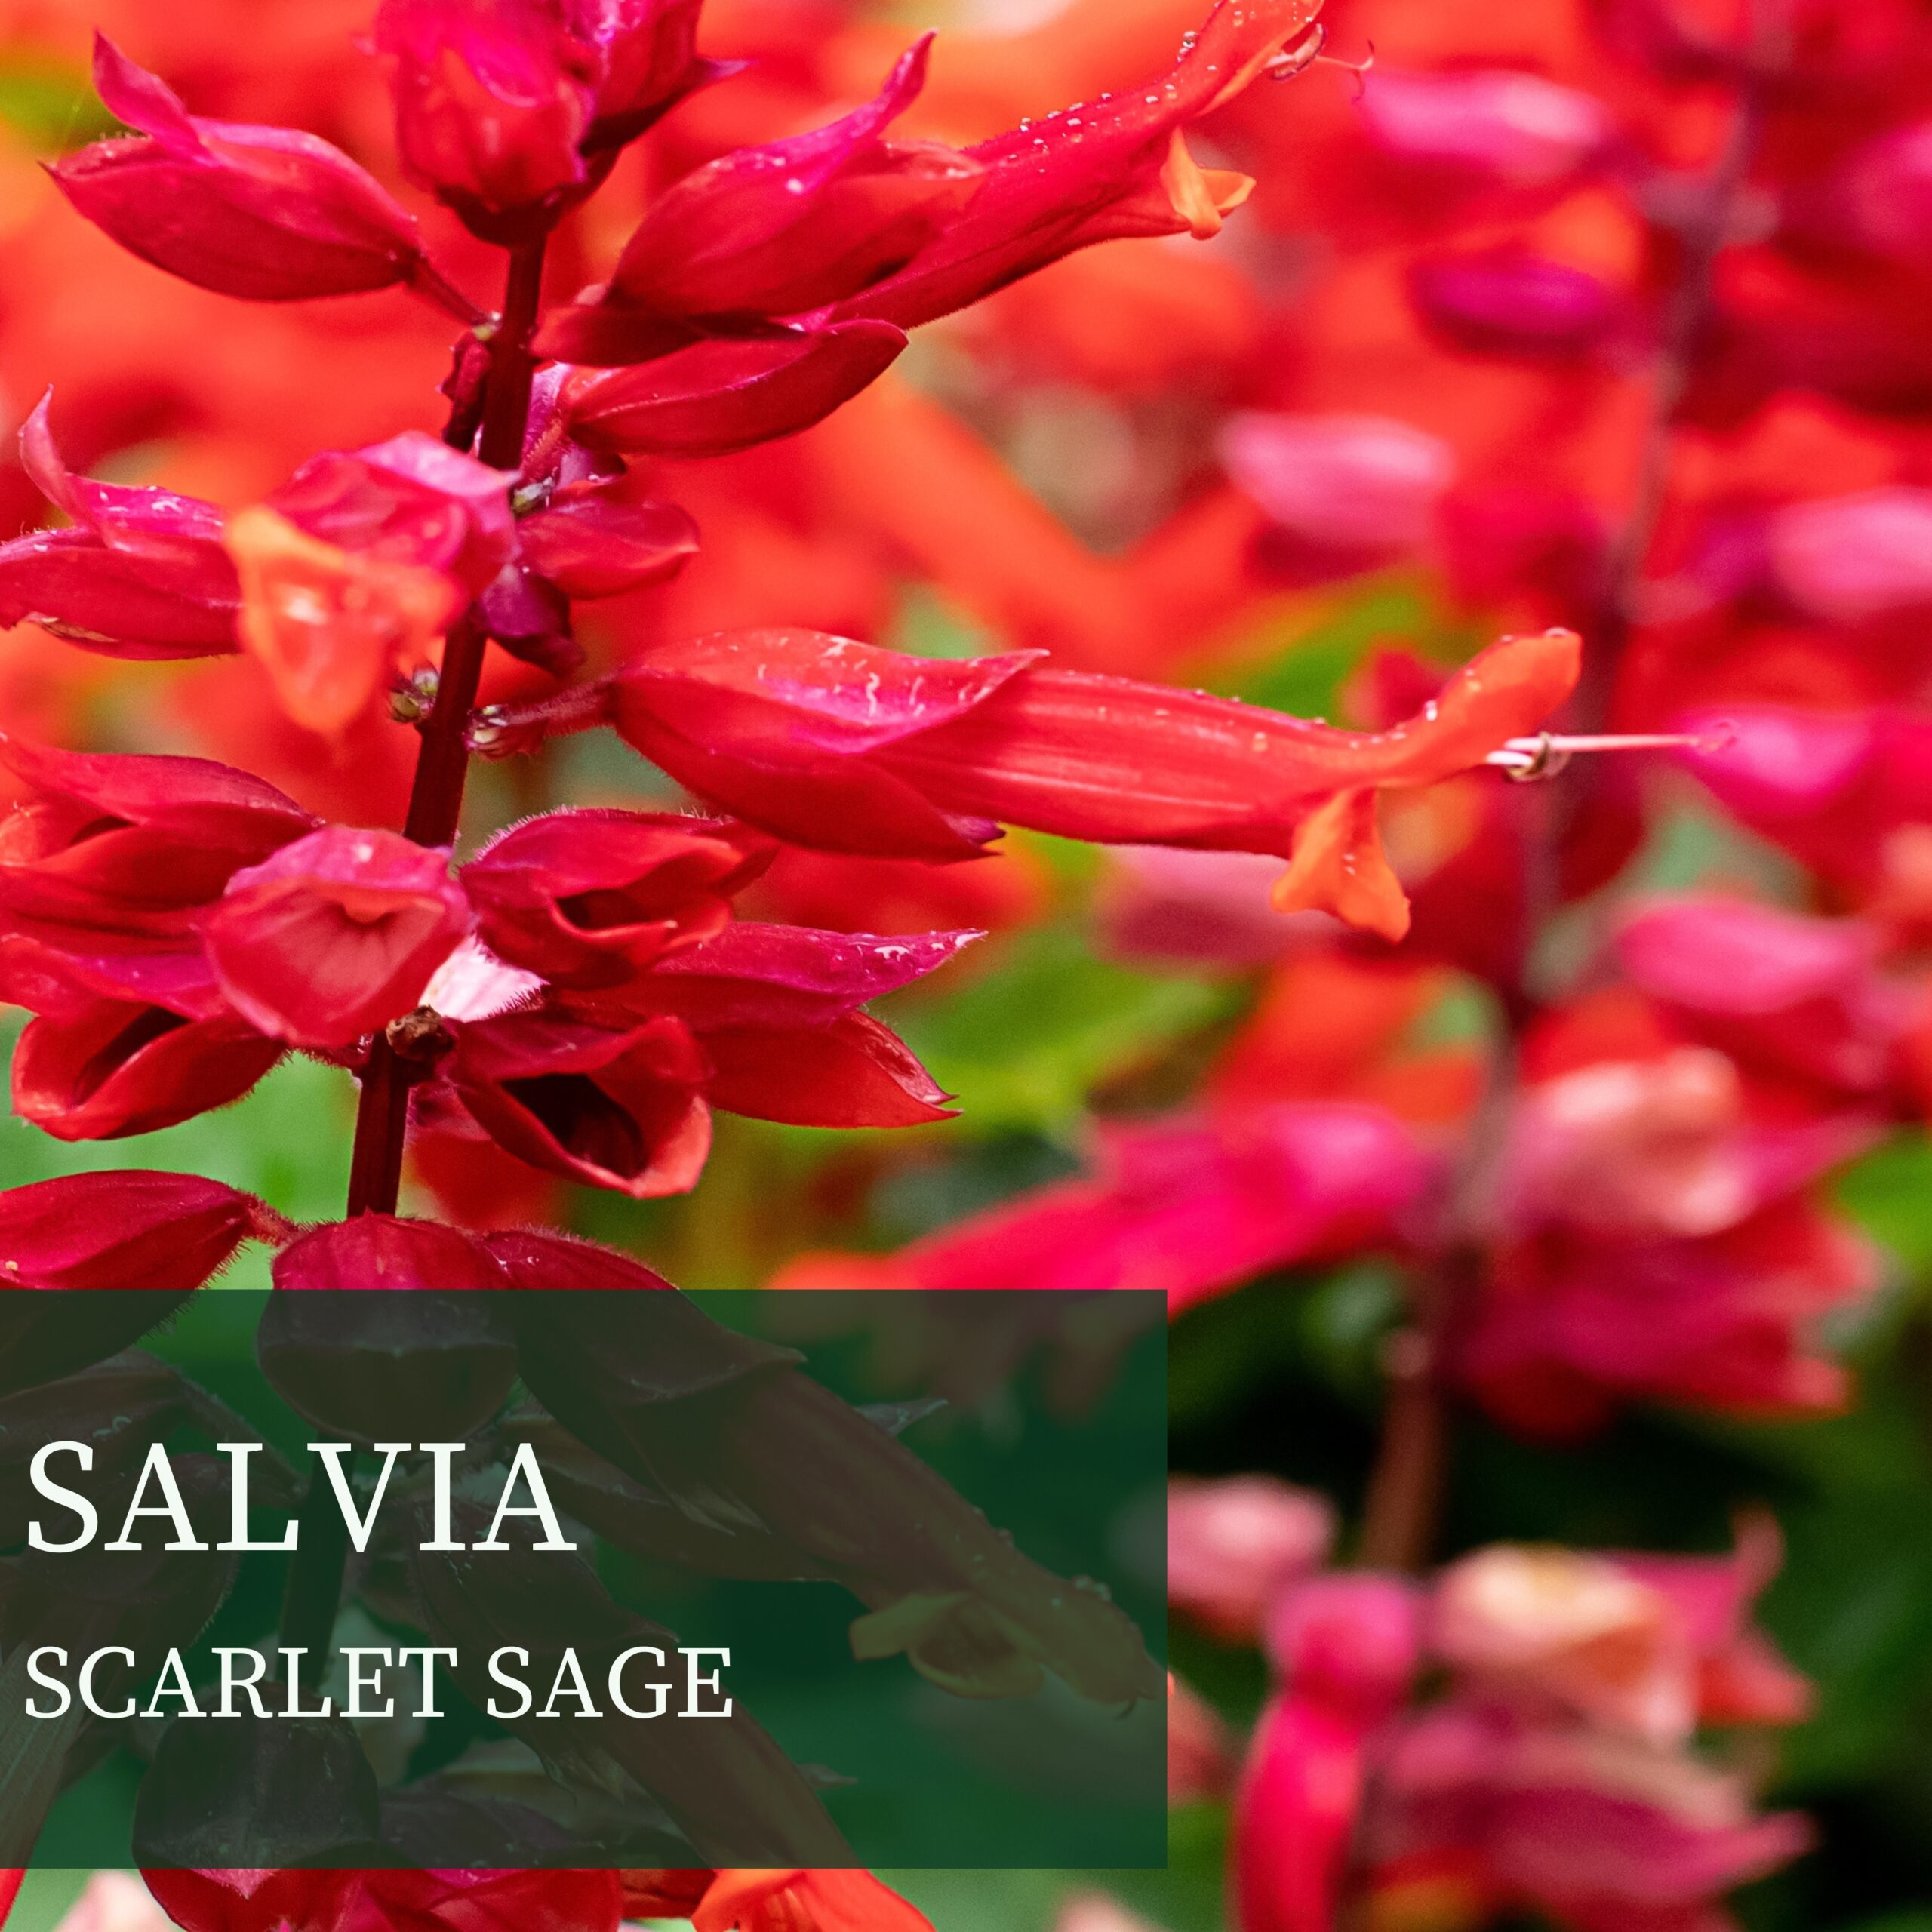 SALVIA SCARLET SAGE